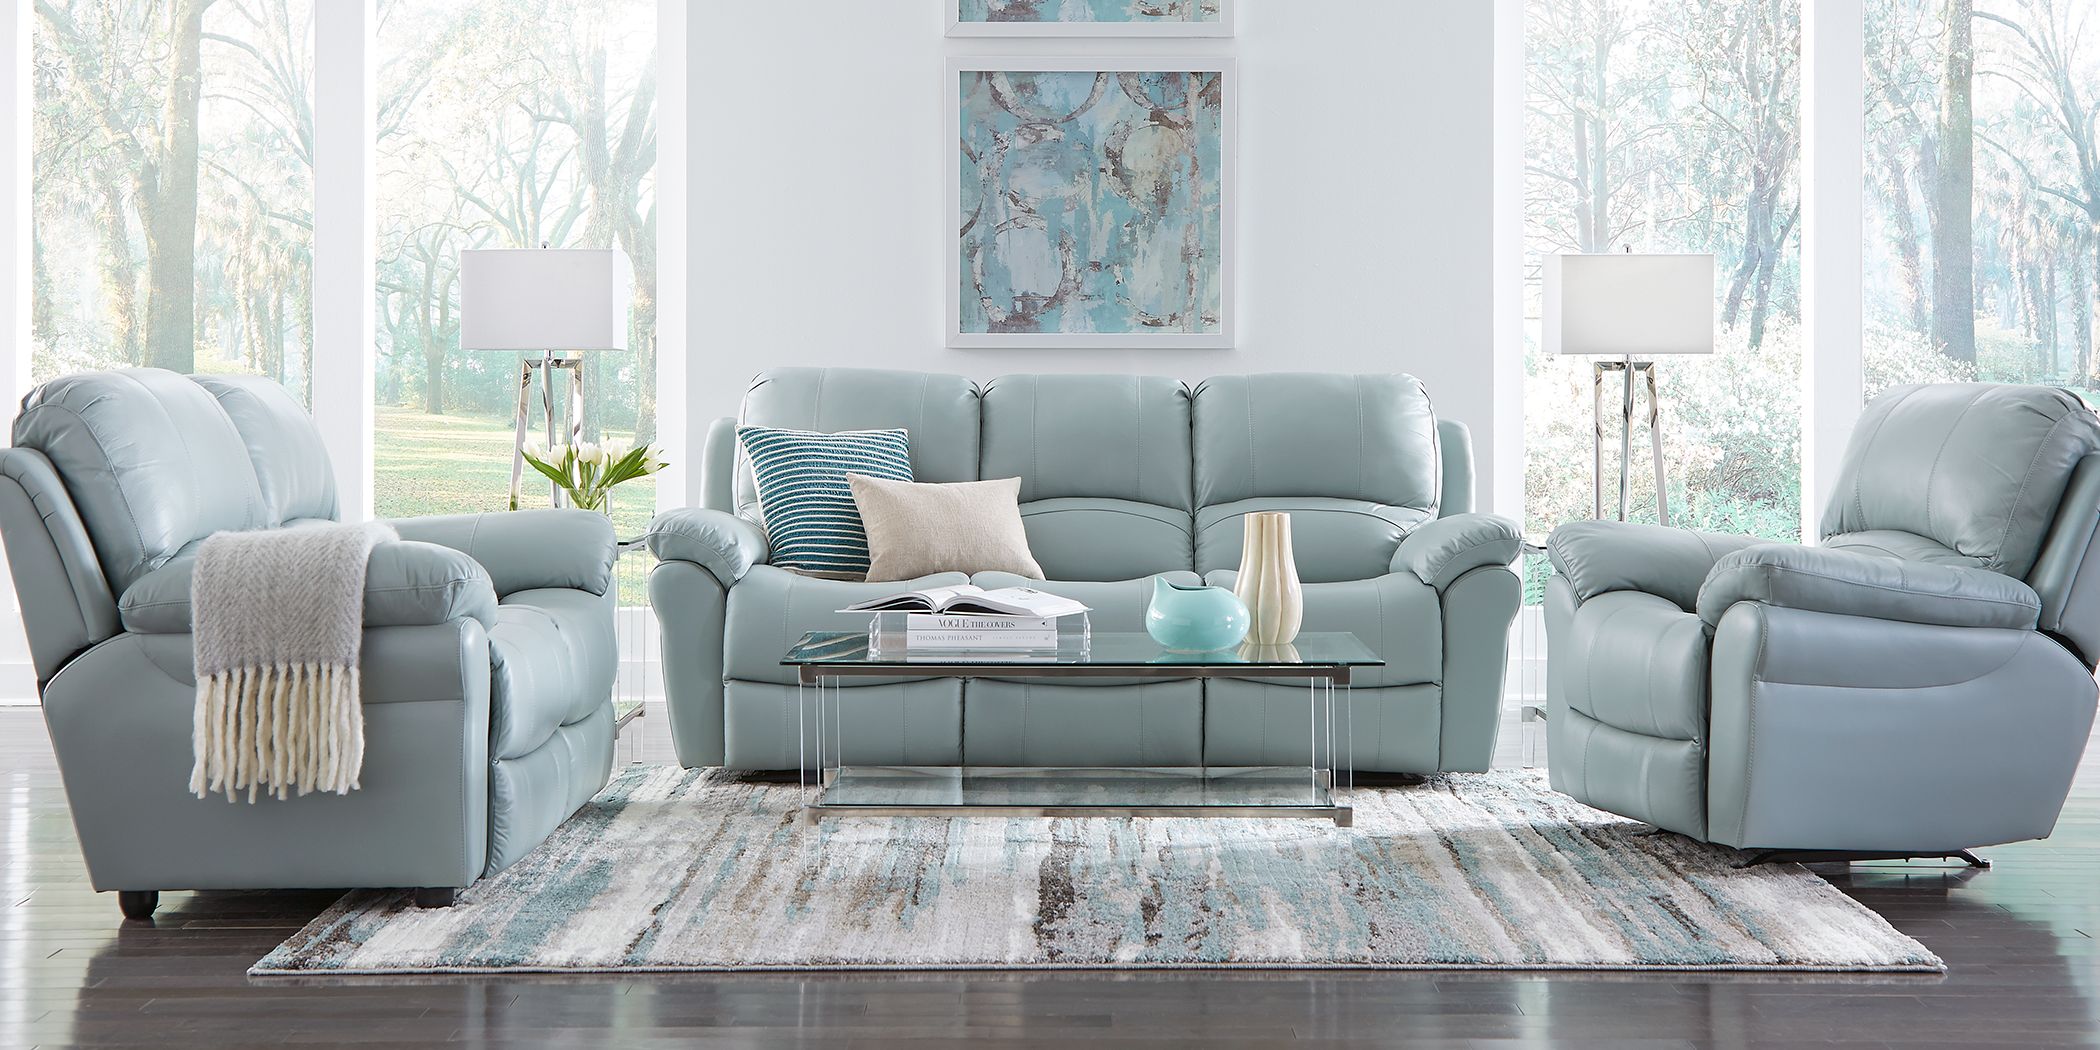 Https Wwwroomstogocom Furniture Product Vercelli Aqua Leather 5 Pc Living Room With Reclining Sofa 7700524P